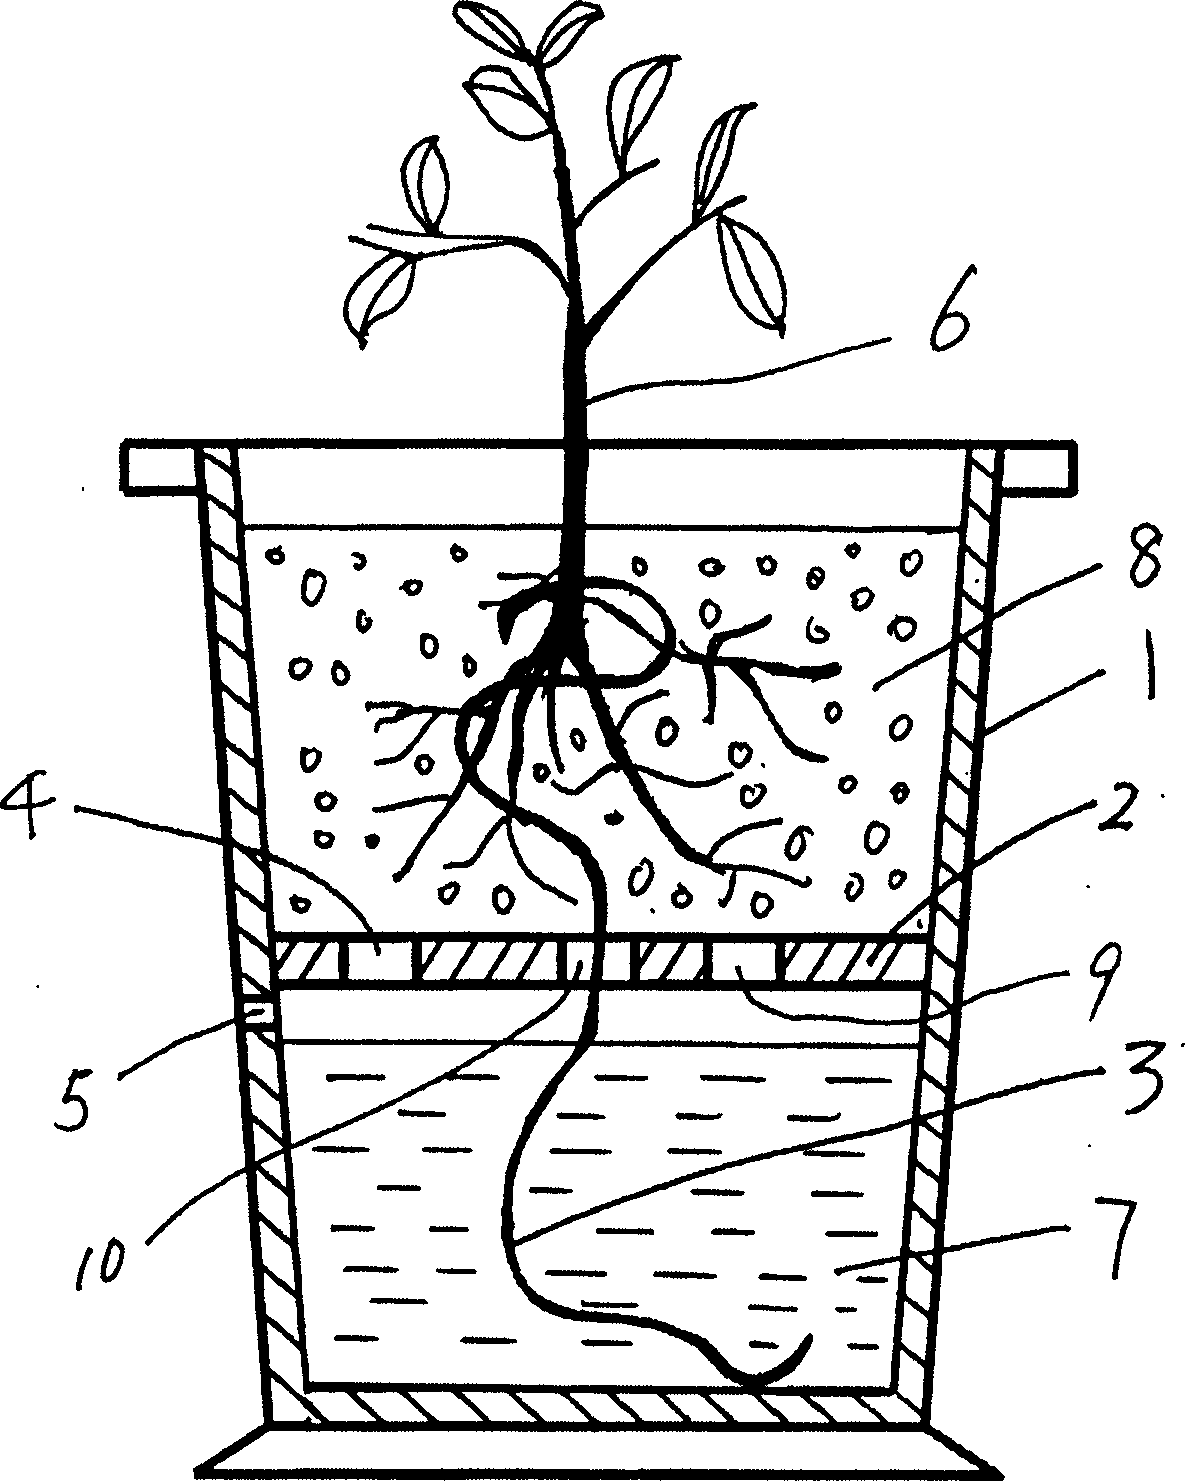 Automatic water-saving dip-irrigating flower pot